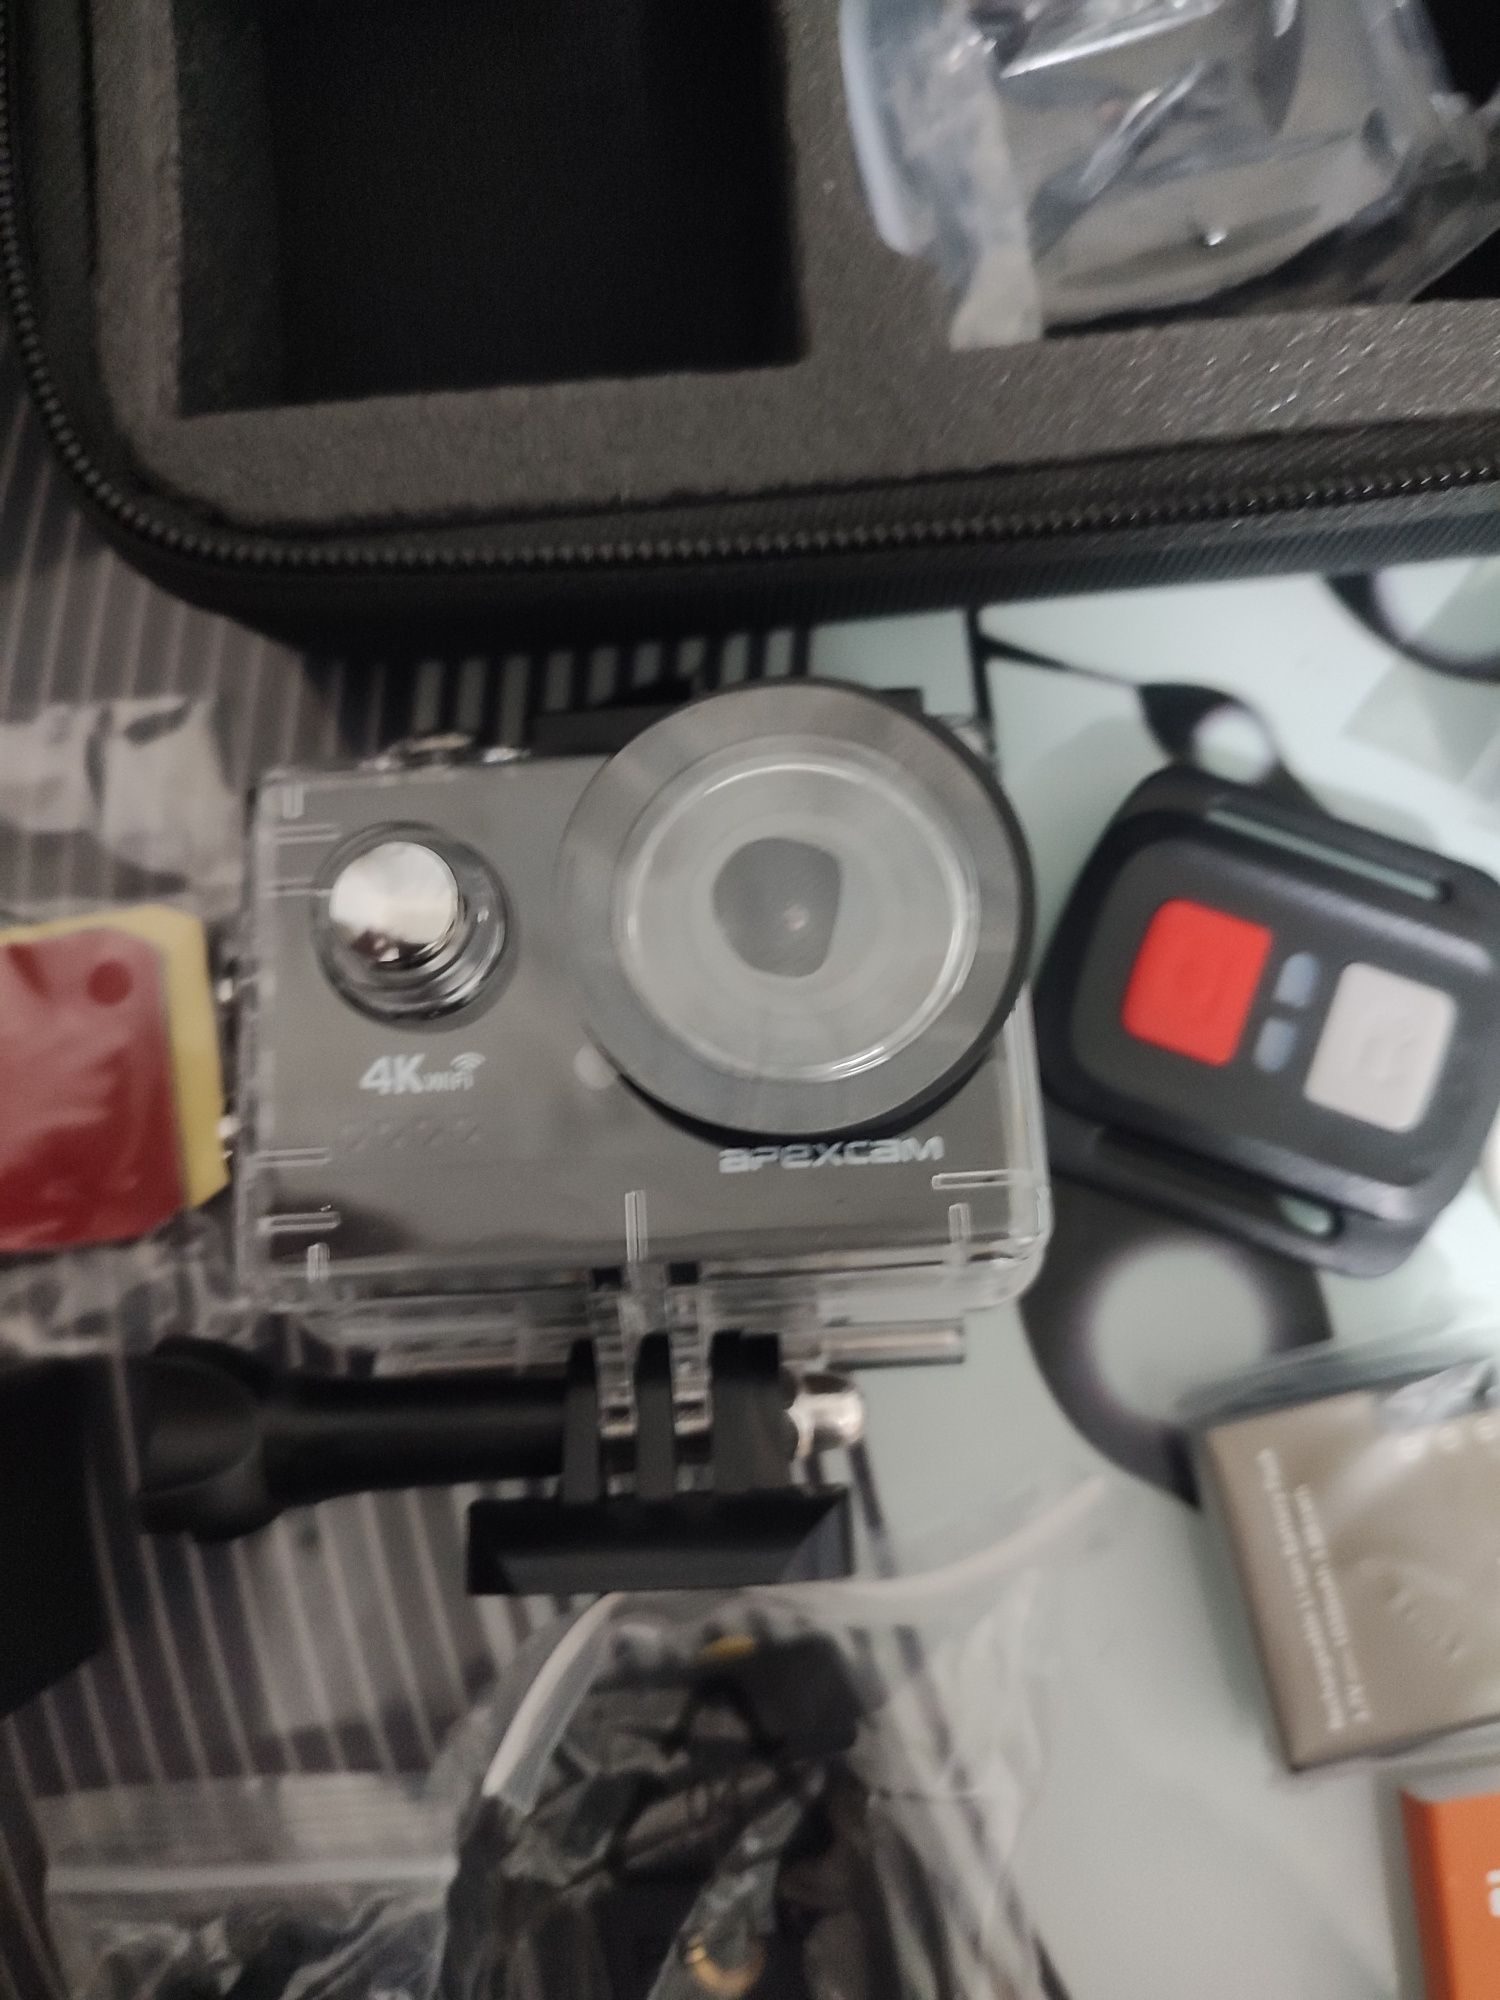 Camera Acțiune/Sport 4k UHD Apexcam M80 Air